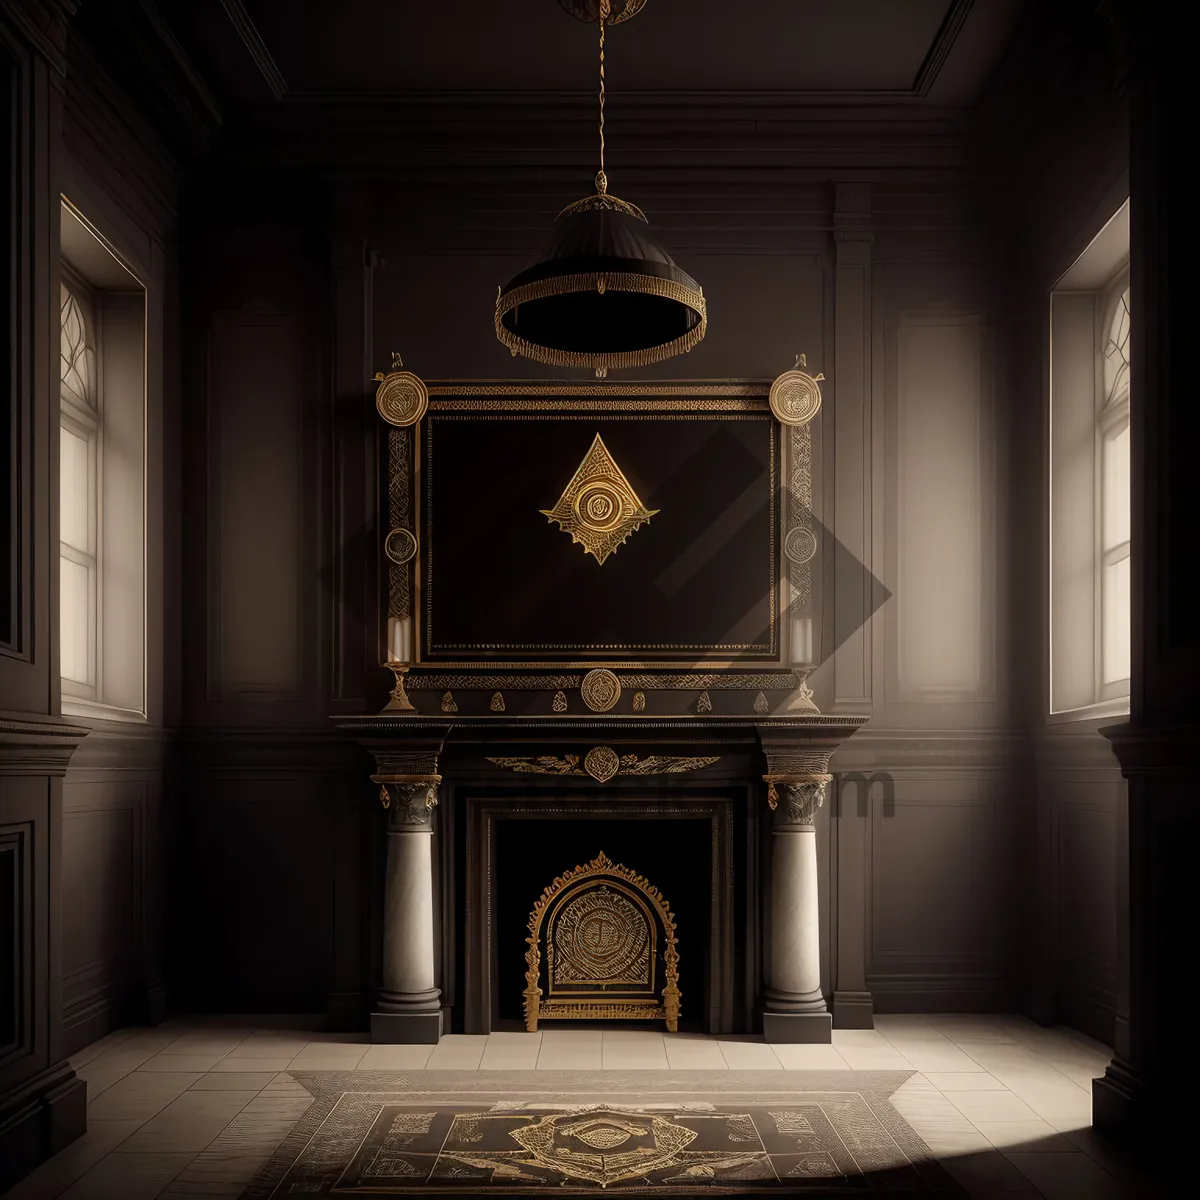 Picture of Grandeur in Wood: Luxurious Throne Room Interior